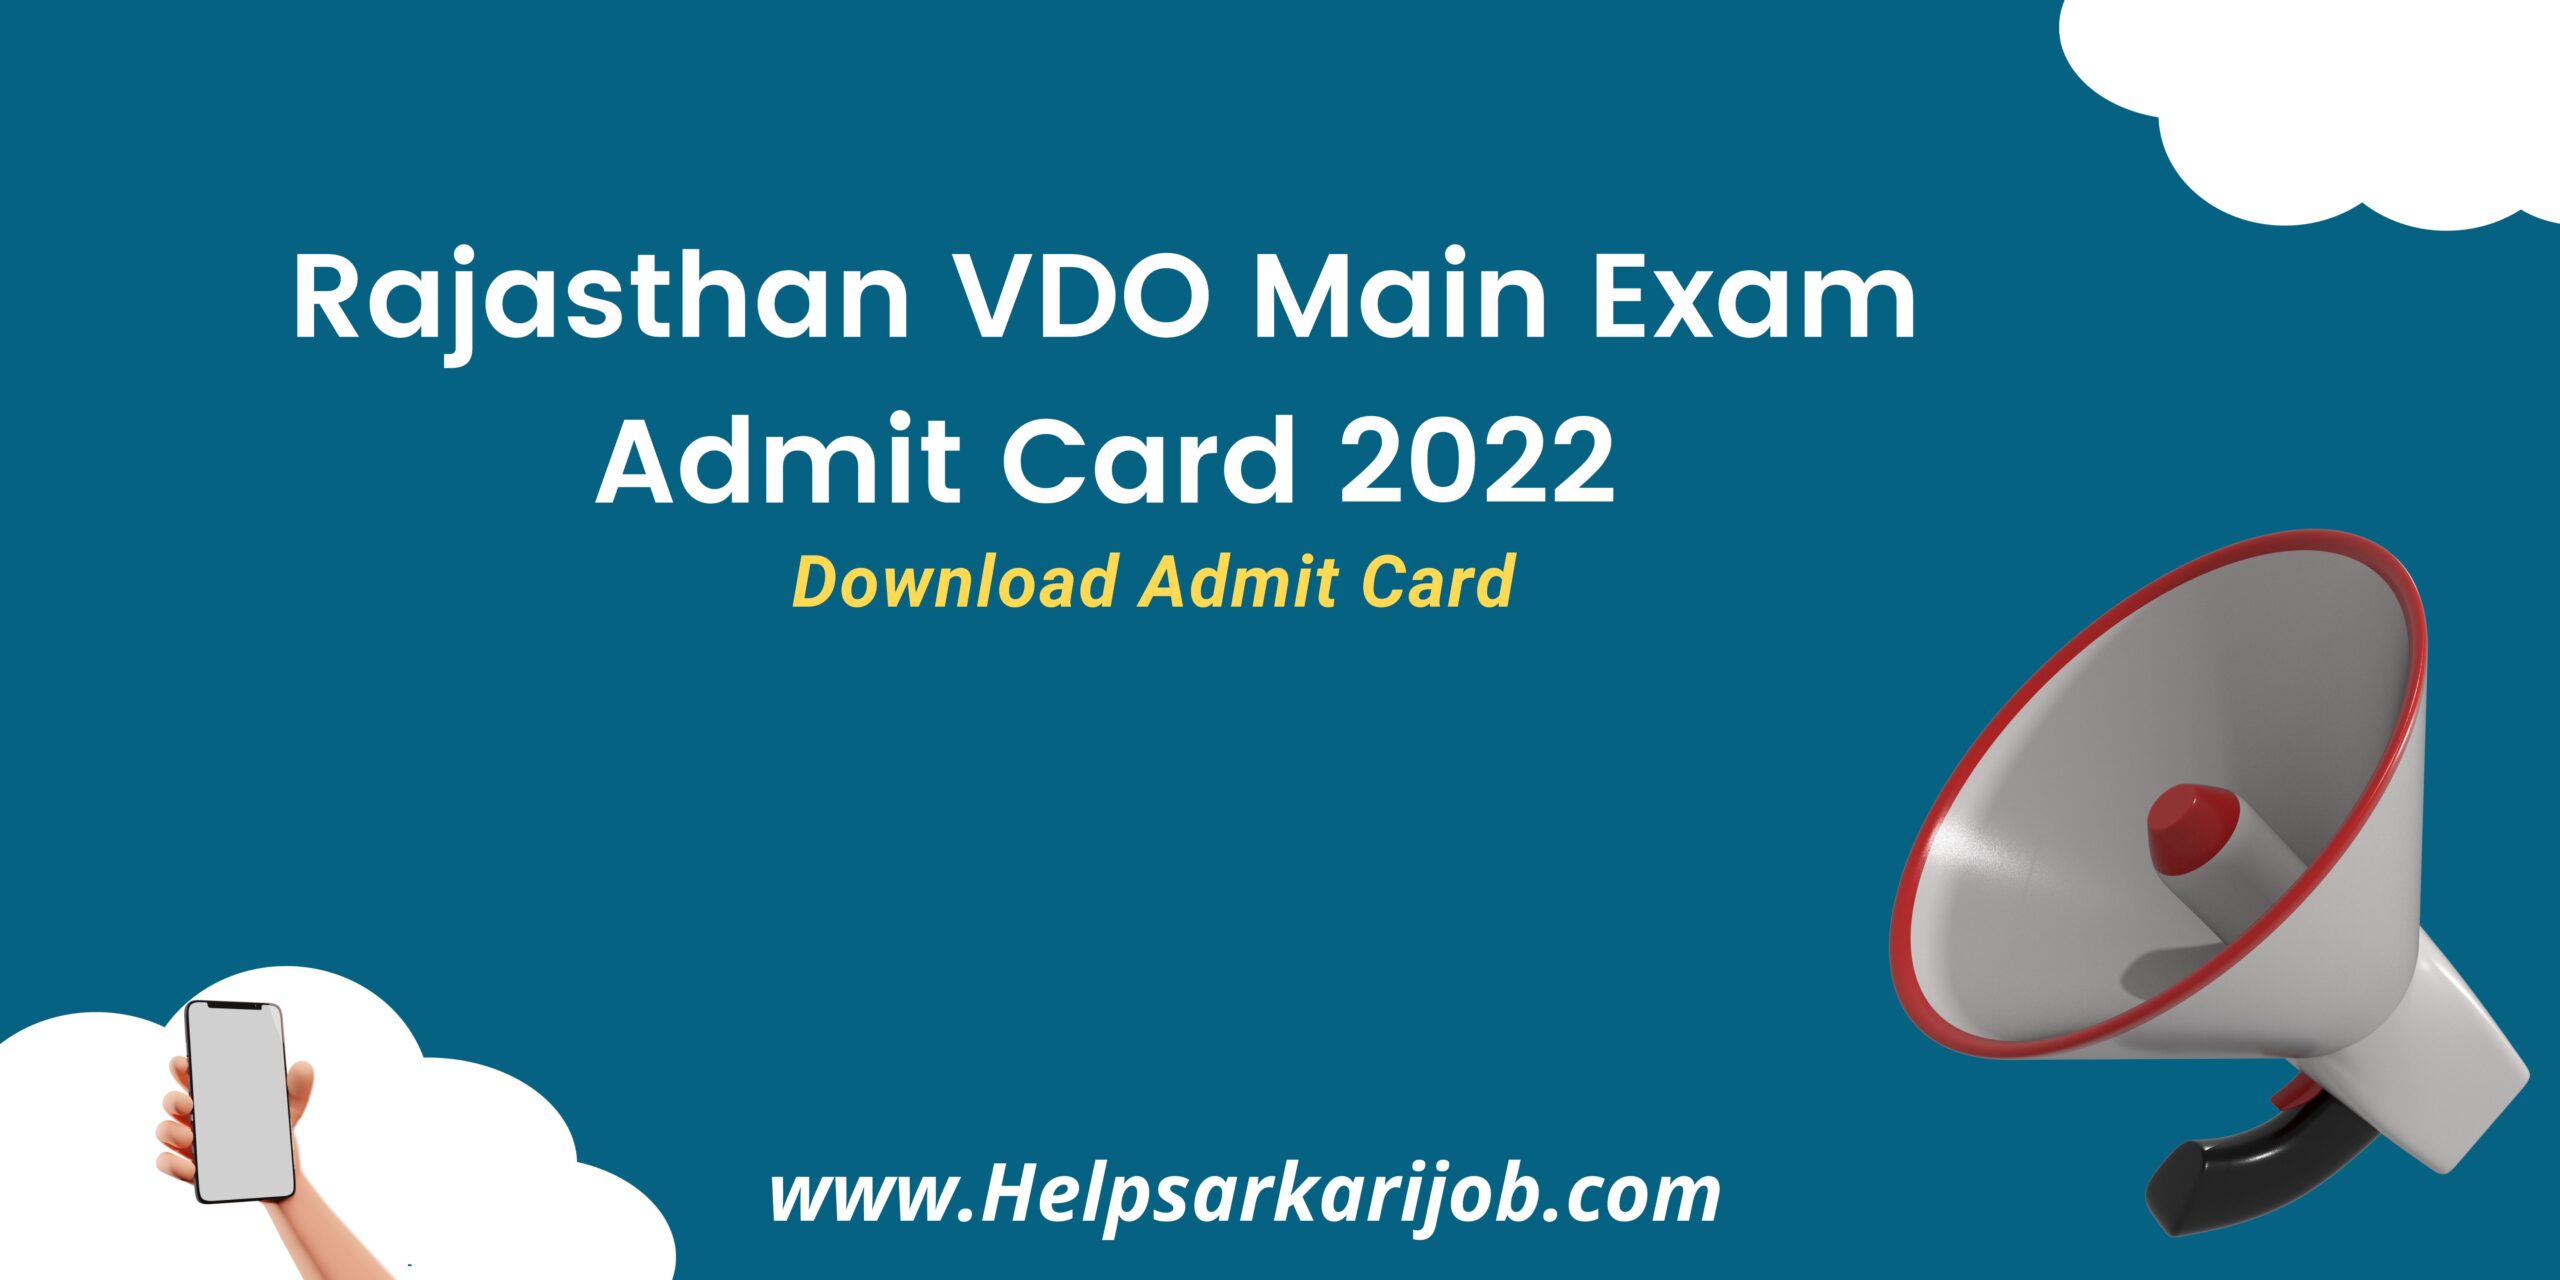 Rajasthan VDO Main Exam Admit Card 2022